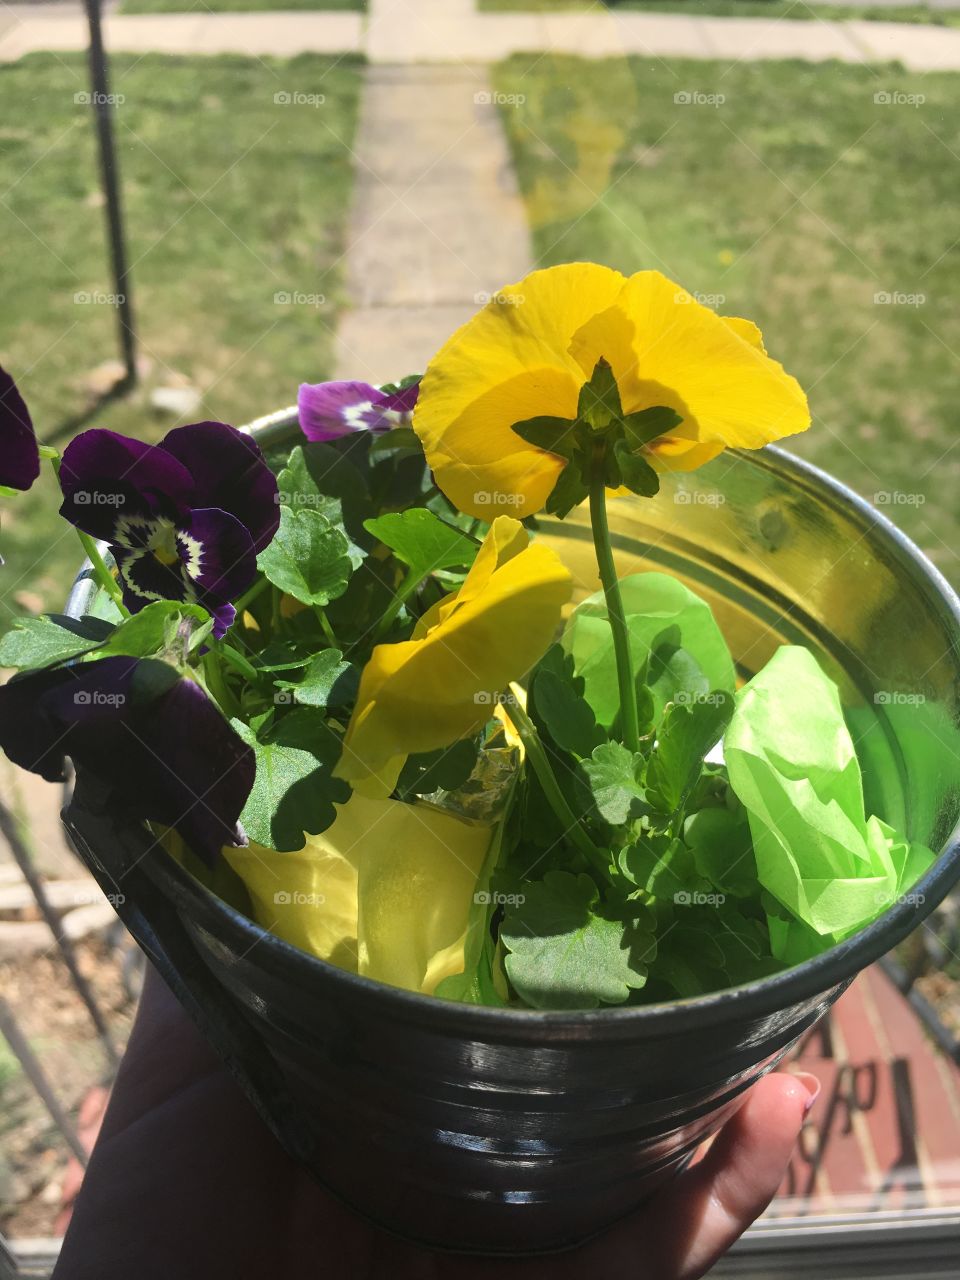 Flowers in a Pot 